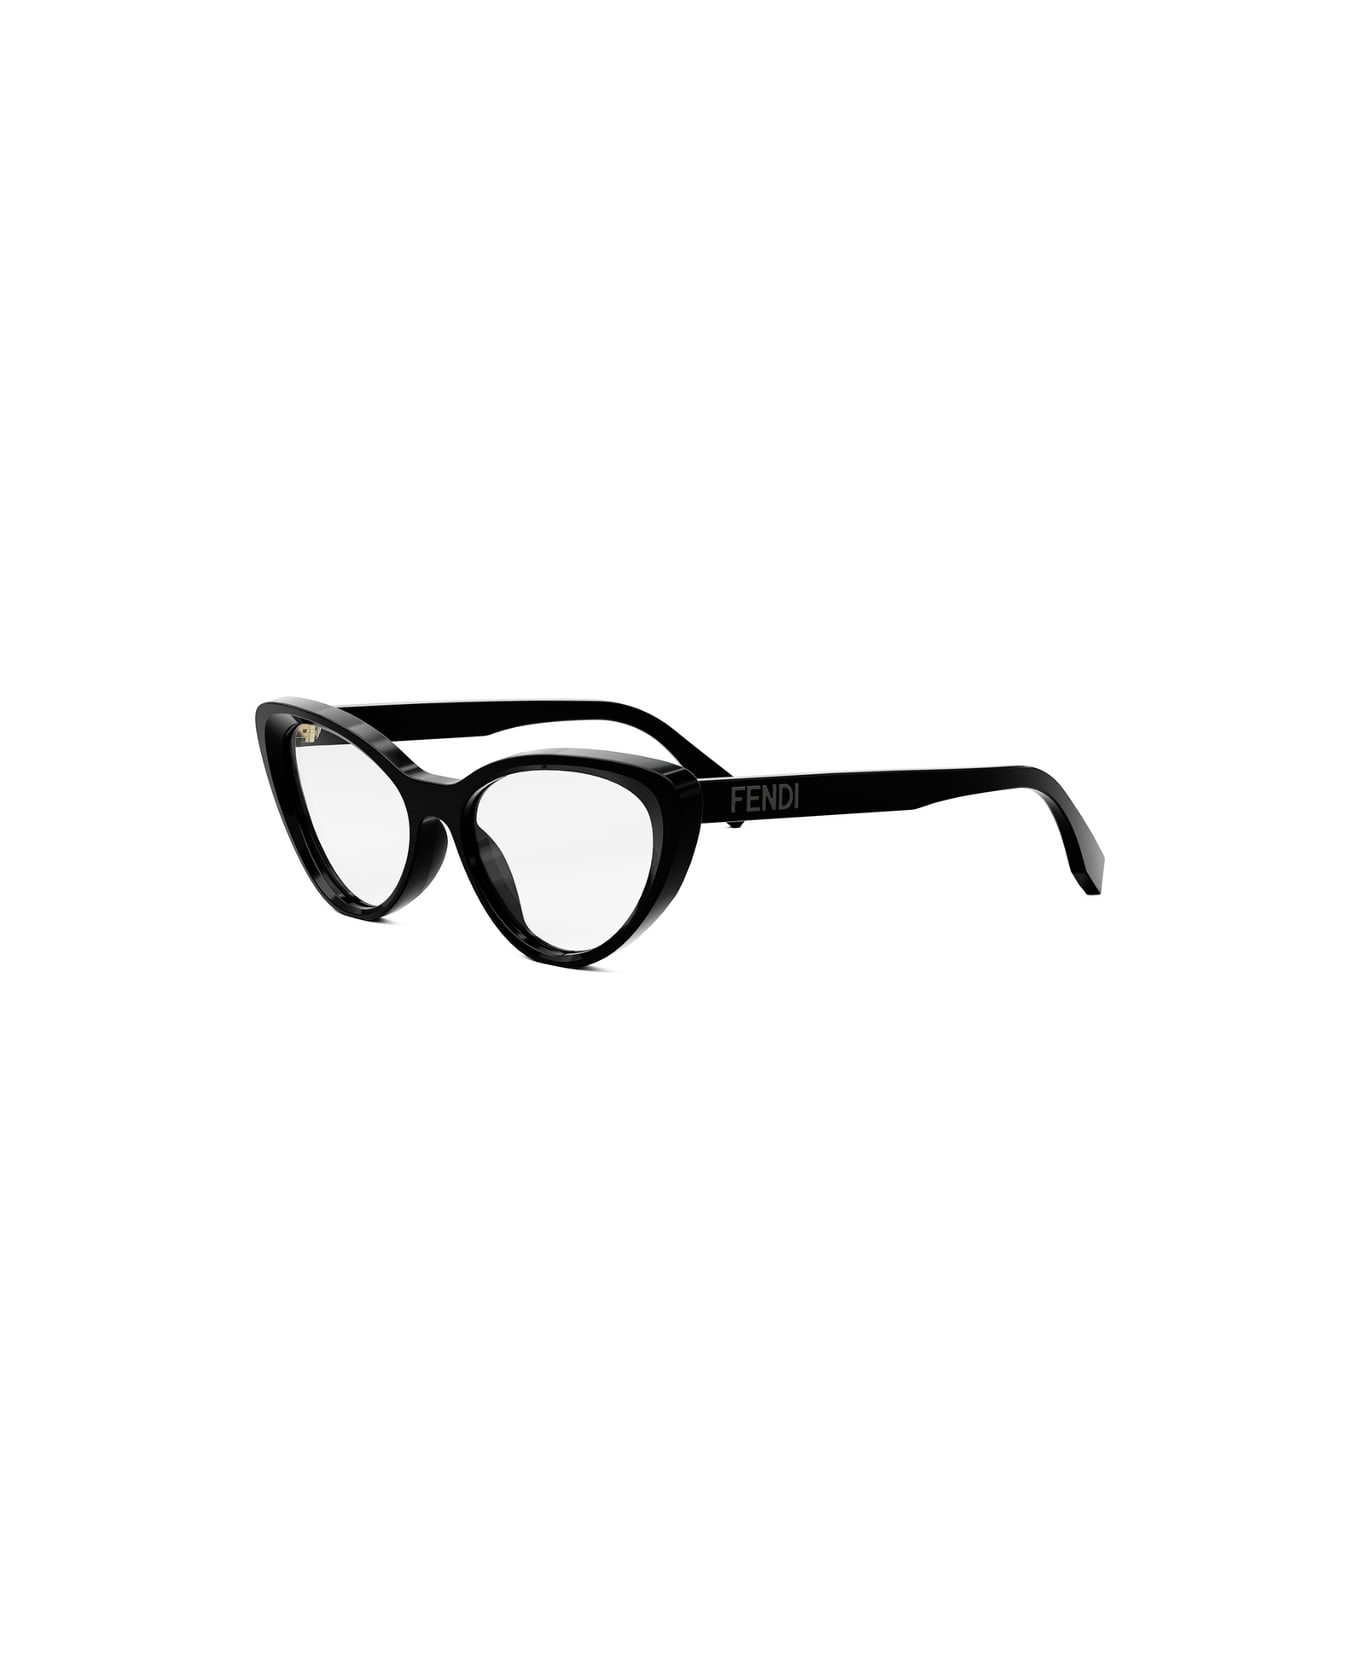 Fendi Eyewear FE50075i 001 Glasses - Nero